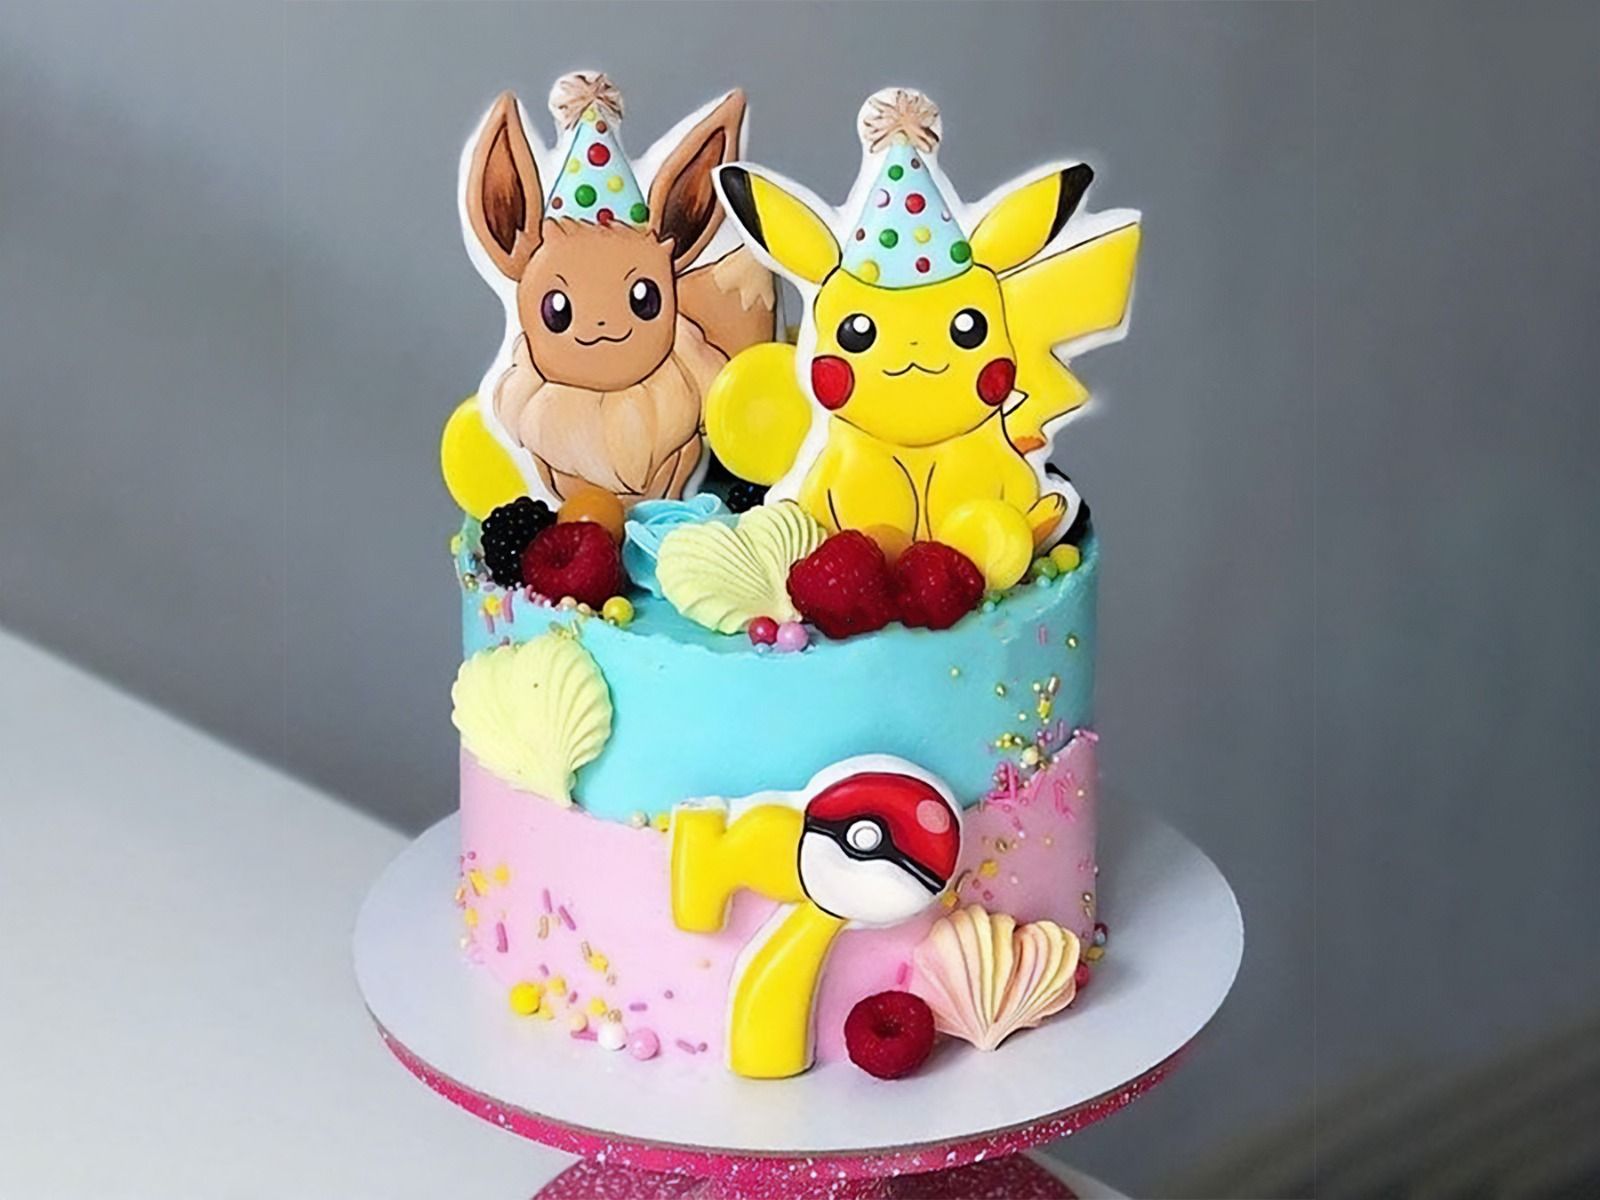 Best Pikachu Cake In Mumbai | Order Online